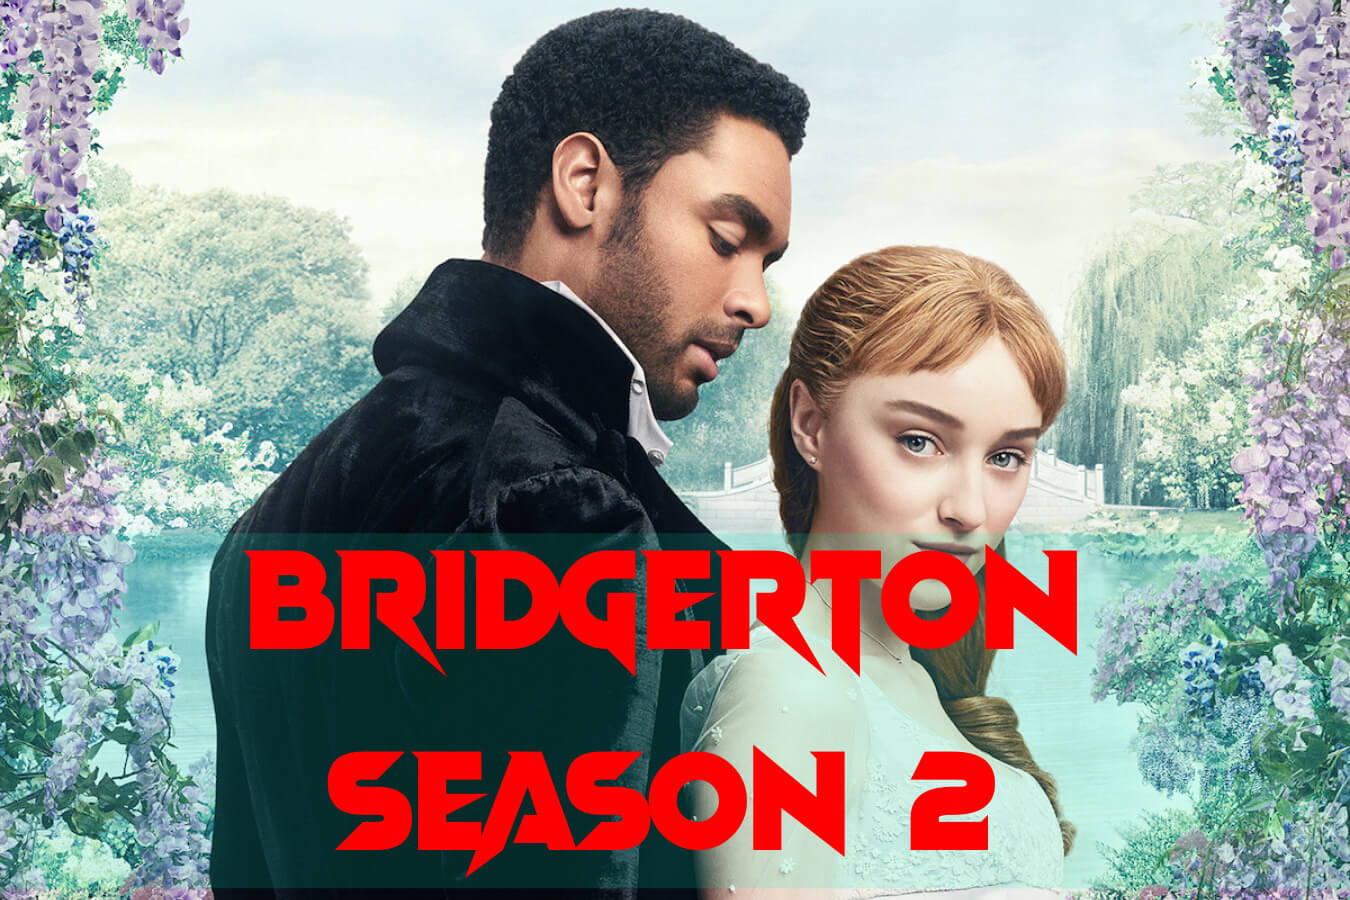 When is Bridgerton season 2 Coming Out